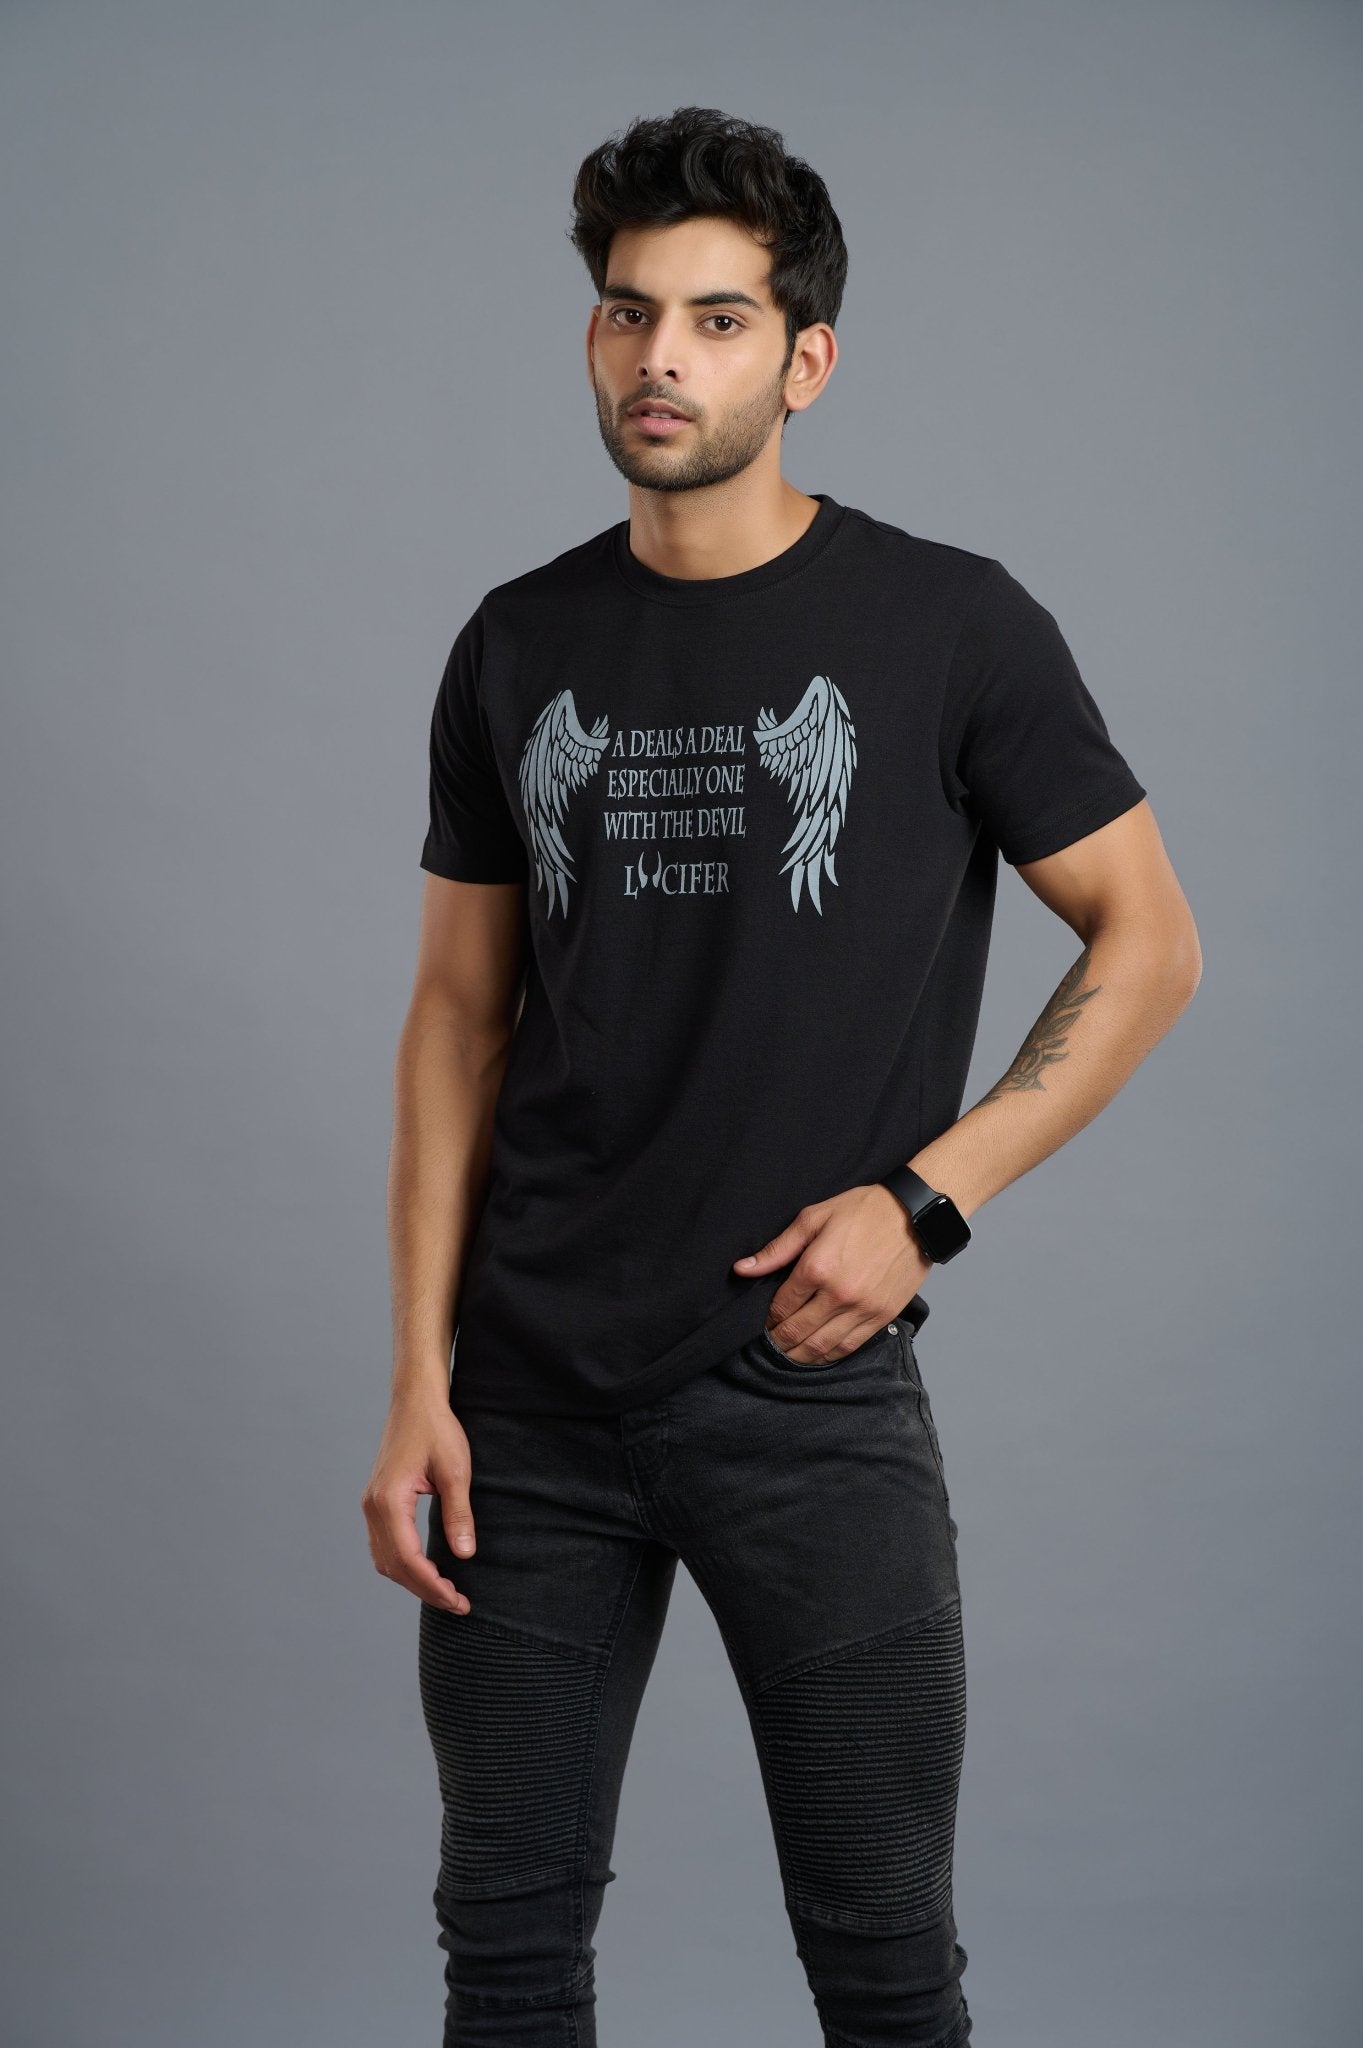 Lucifer the Devil Printed Black T-Shirt for Men - Go Devil